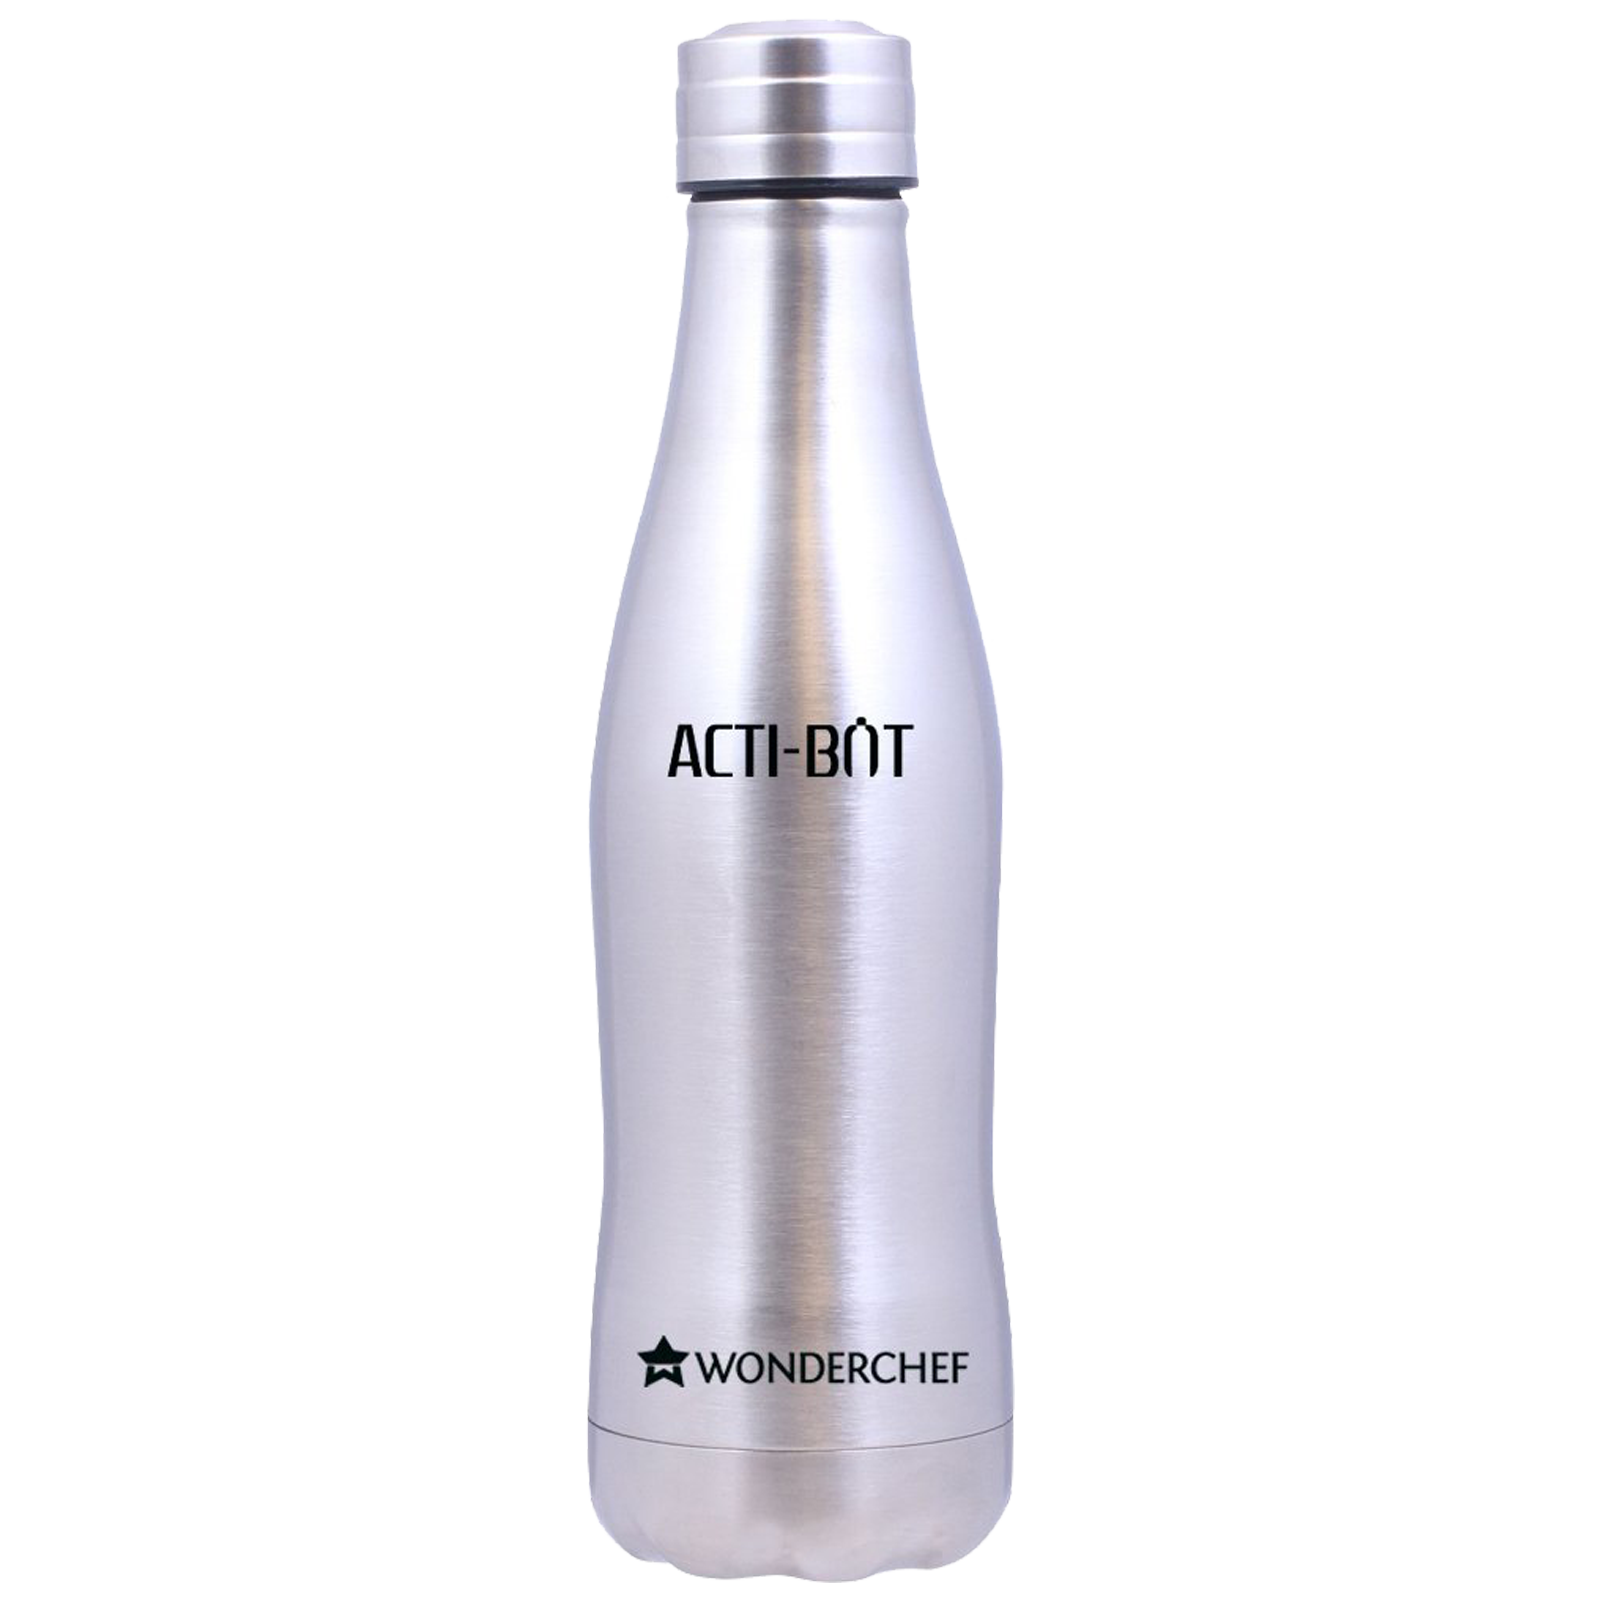 wonderchef - wonderchef Acti-Bot 0.65 Litres Stainless Steel Water Bottle (Spill and Leak Proof, 63153146, Silver)